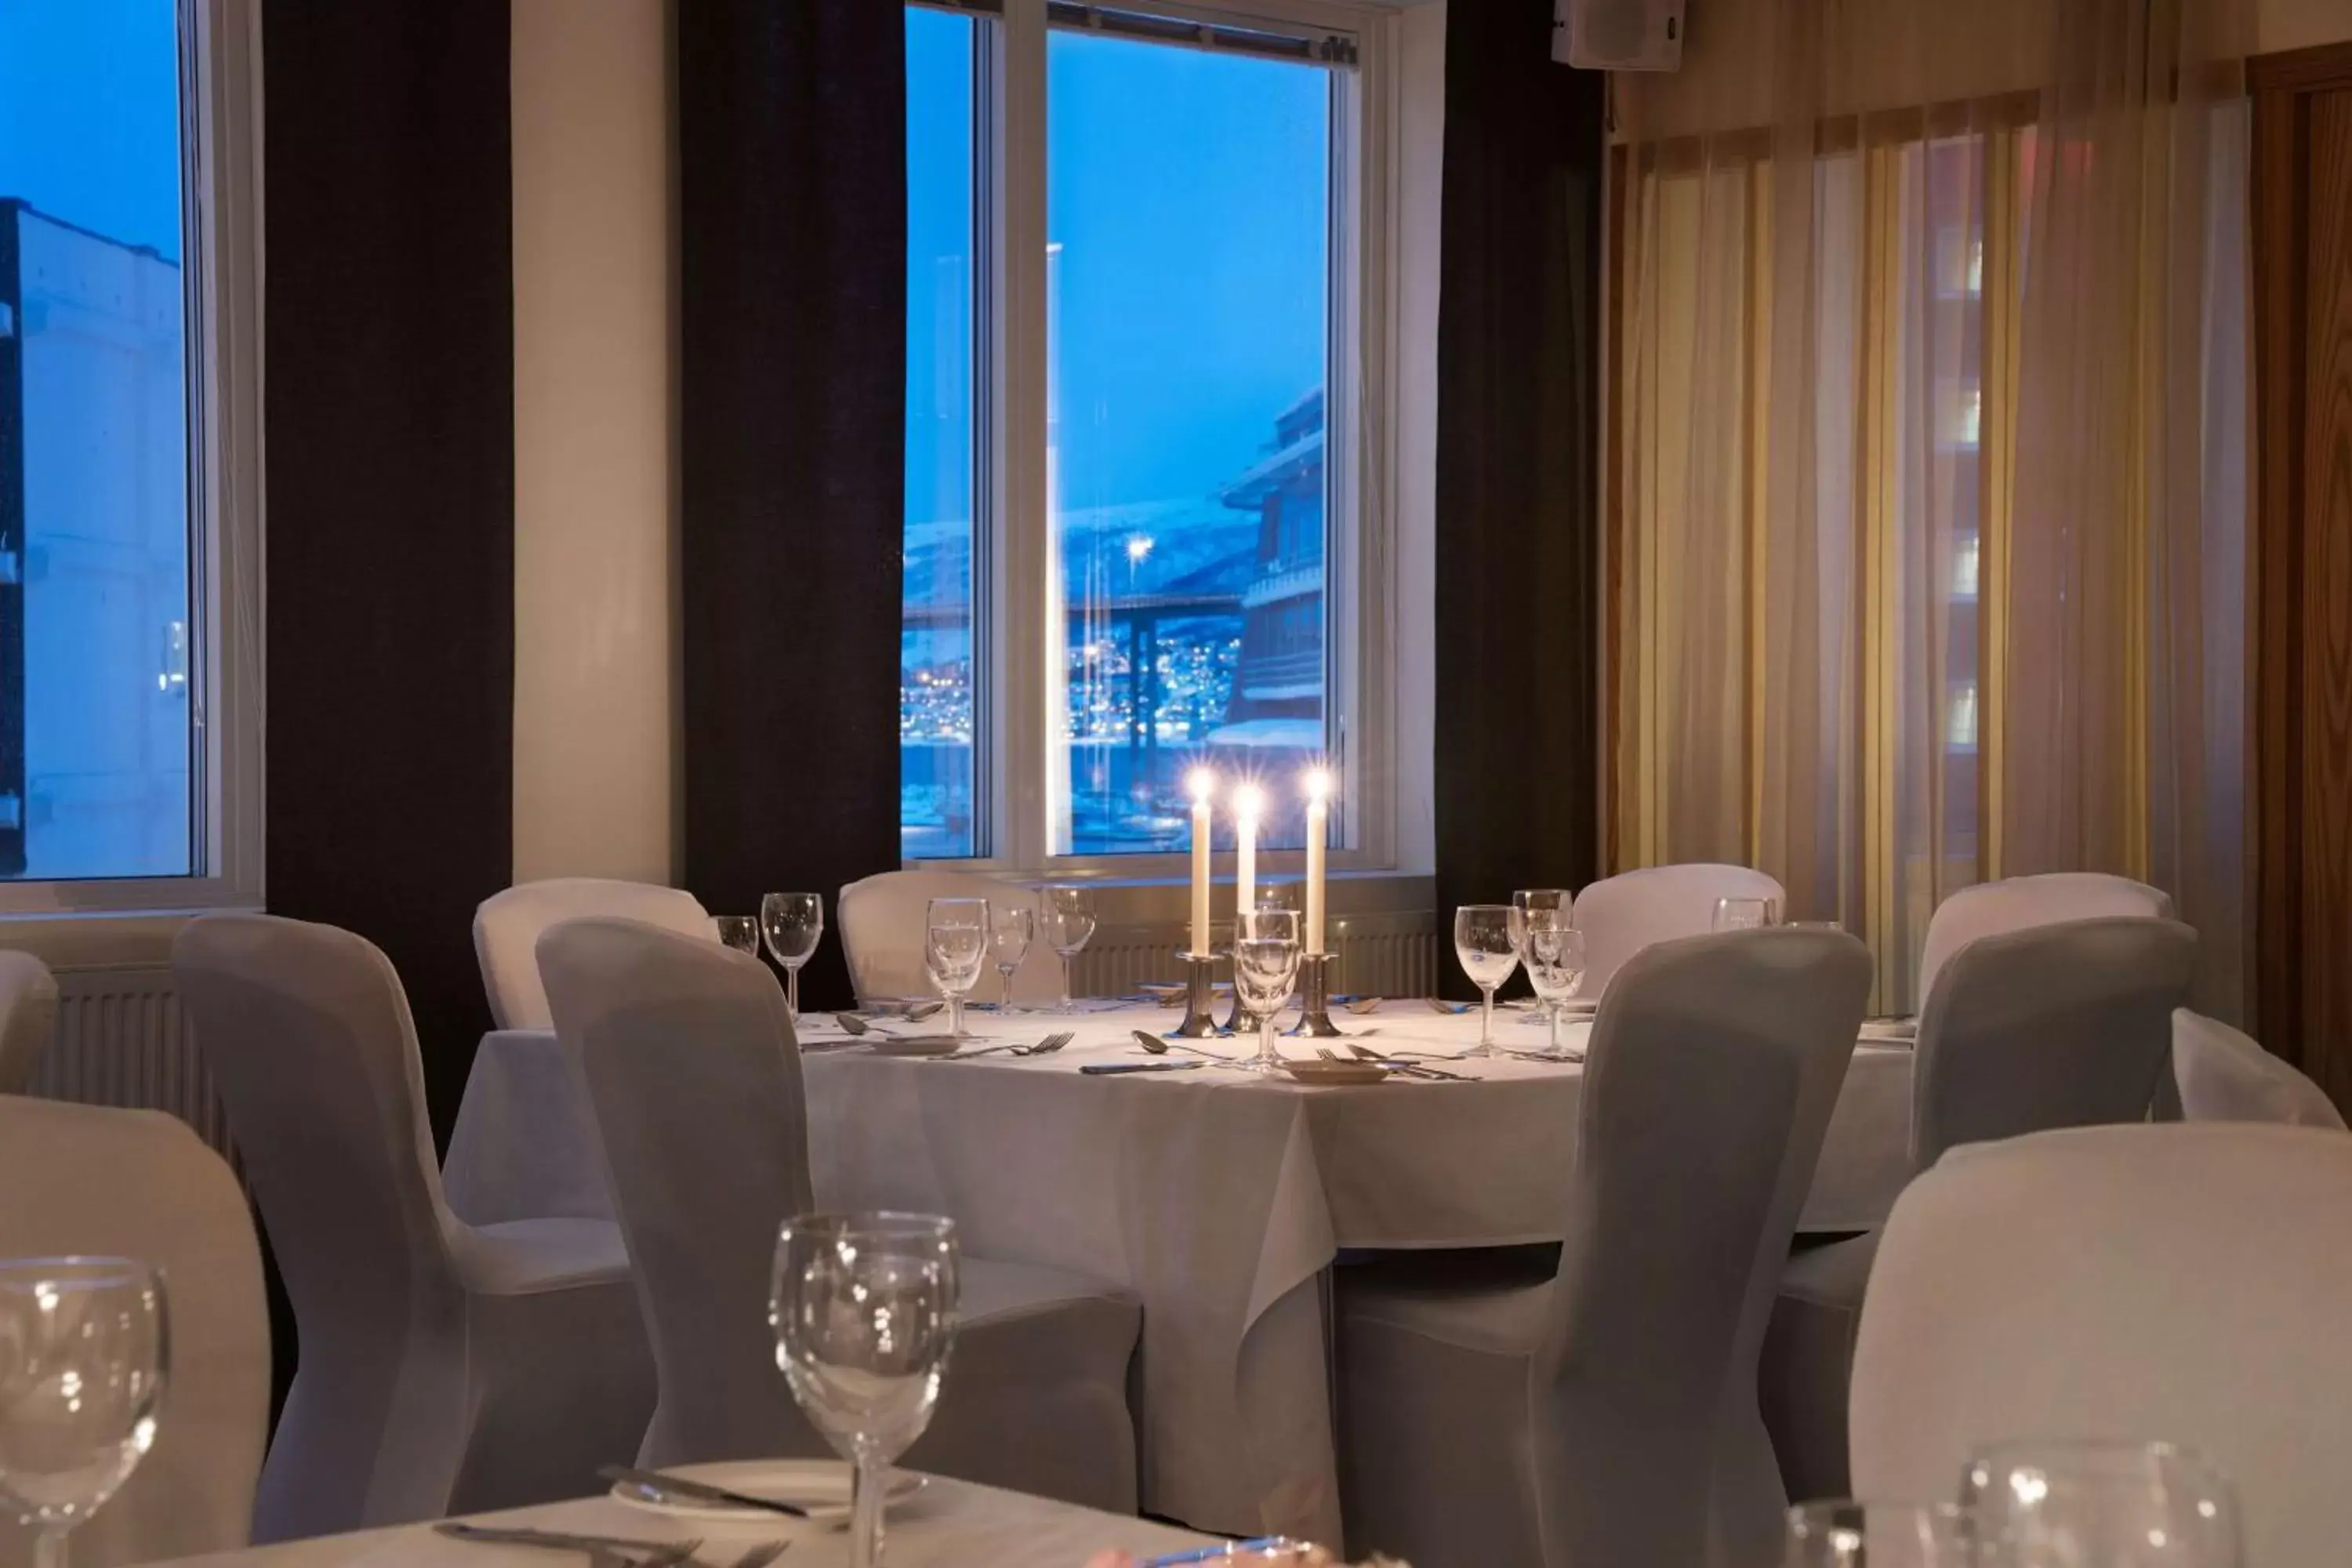 On site, Banquet Facilities in Radisson Blu Hotel Tromsø